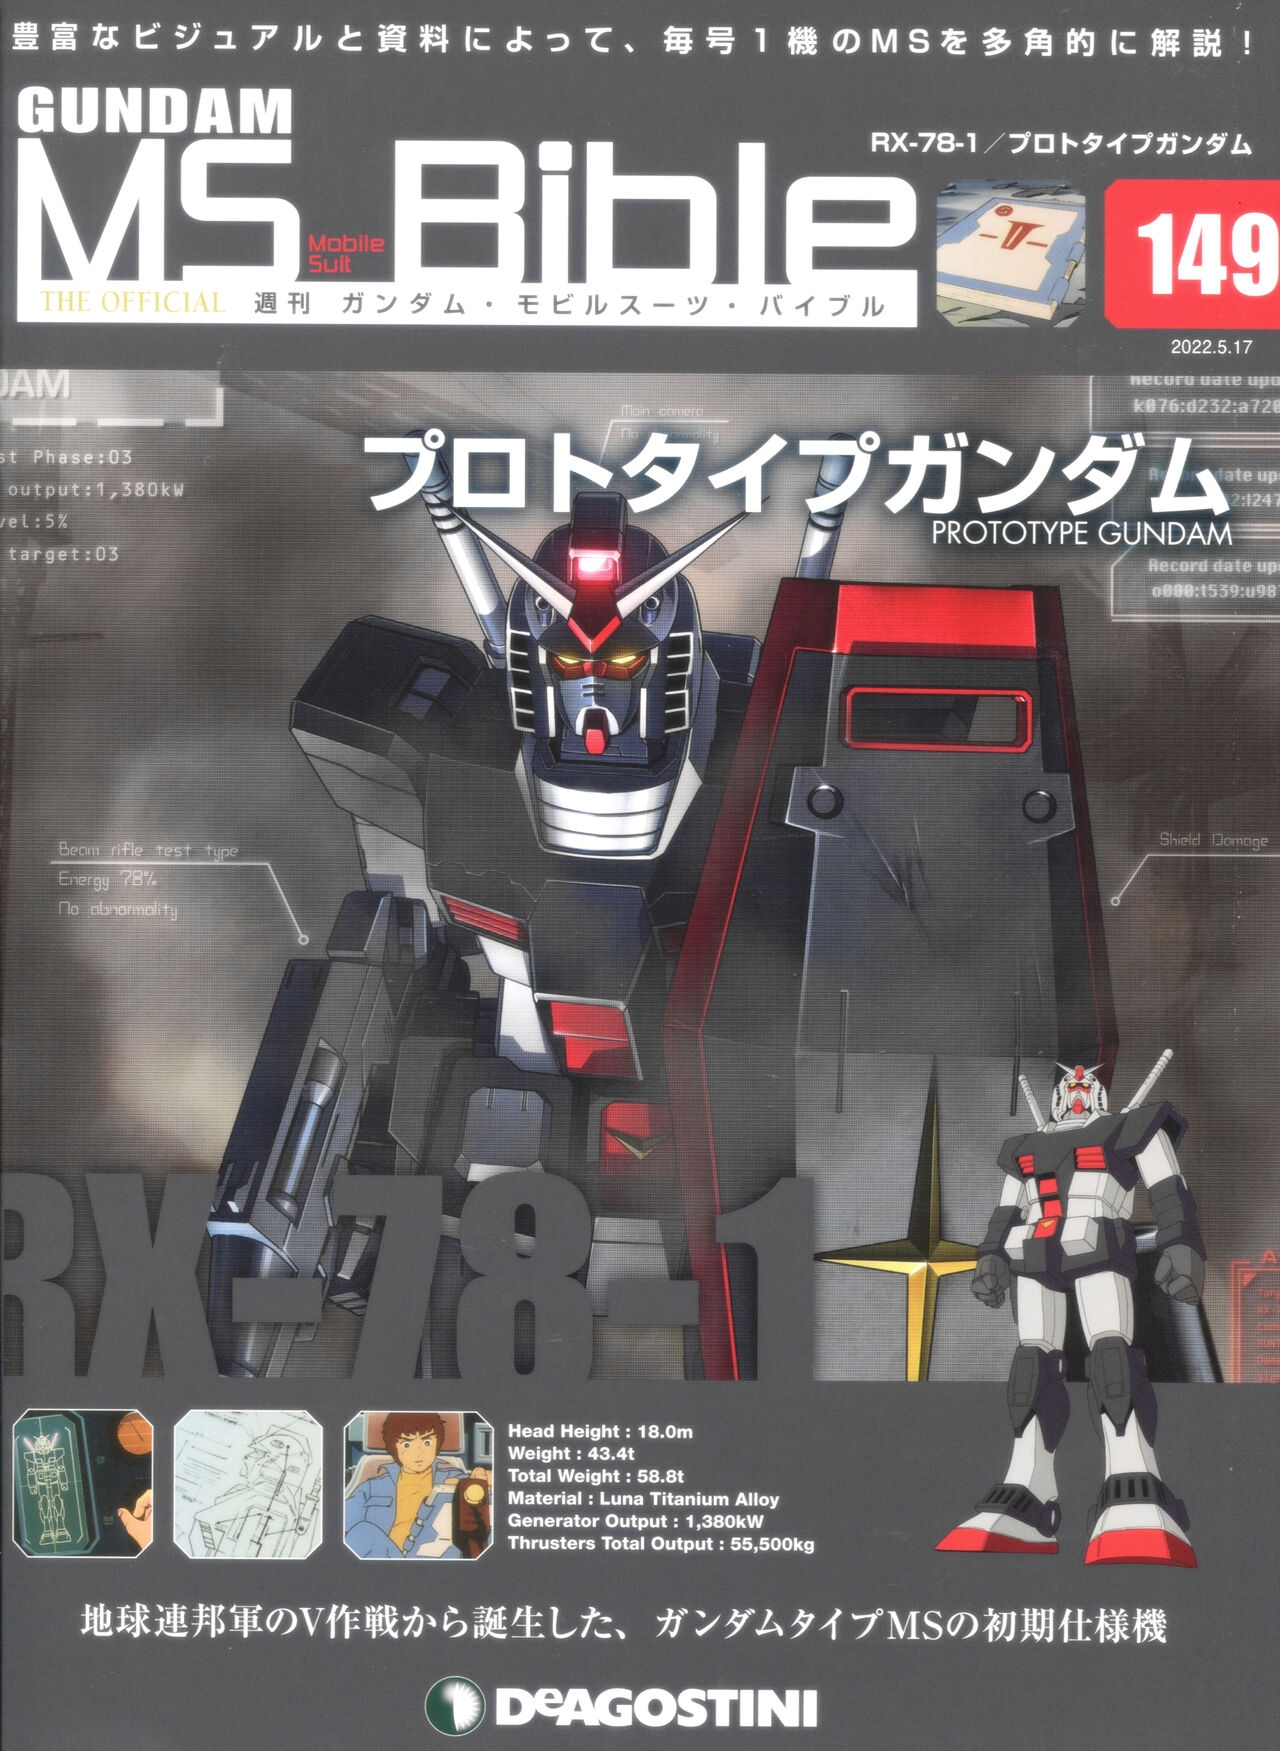 Gundam Mobile Suit Bible 149 0